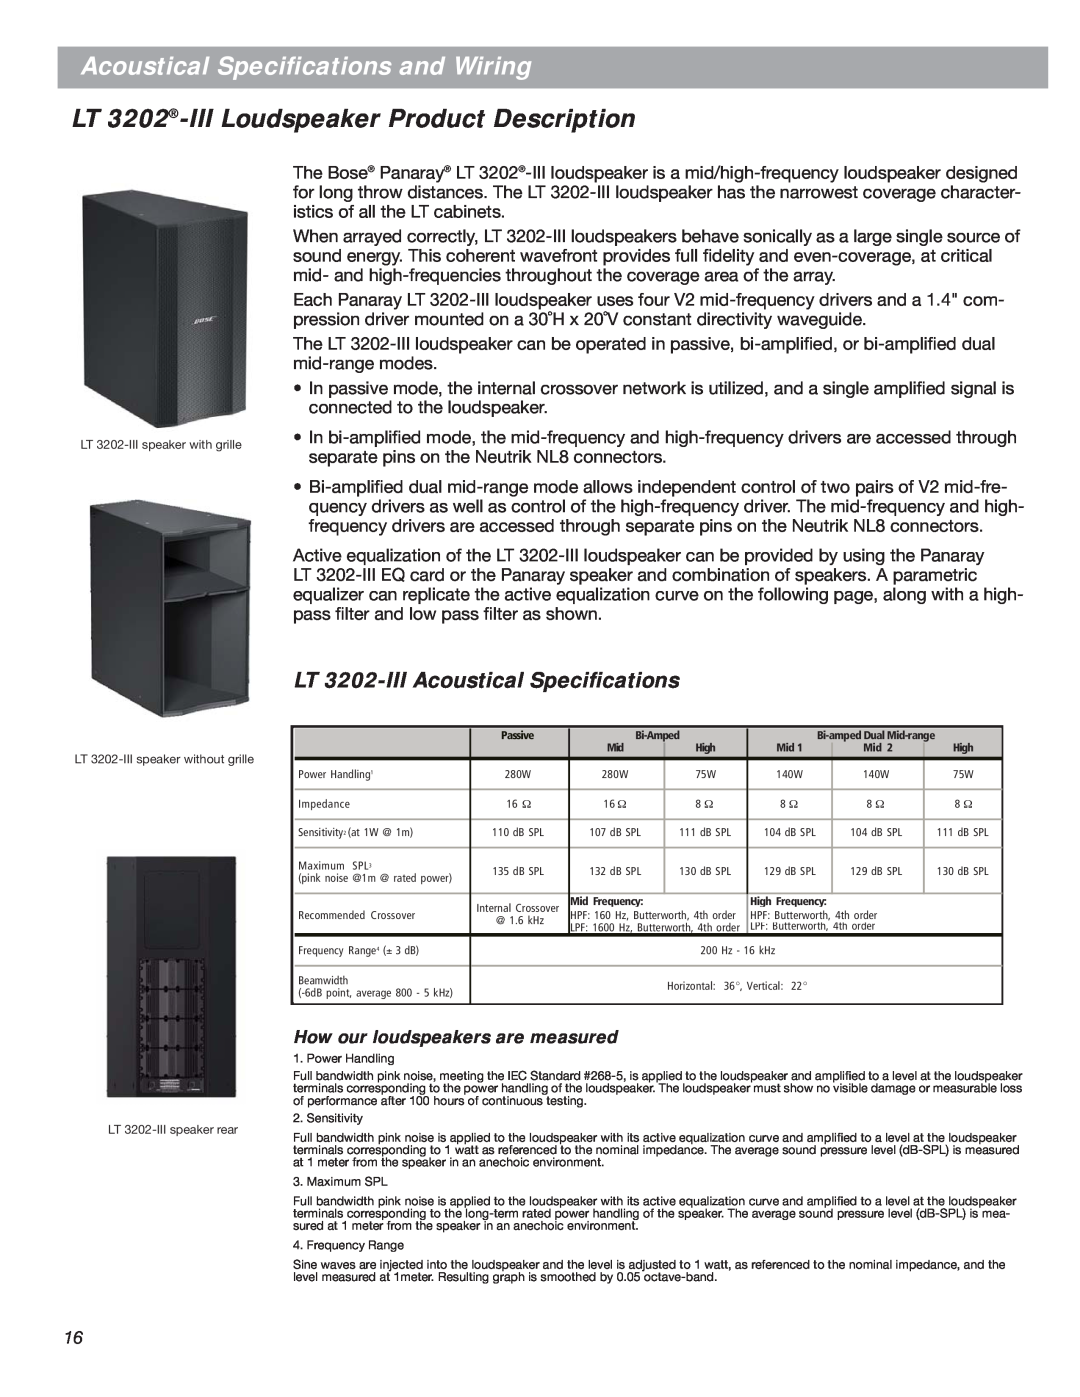 Bose LT Series III manual LT 3202-IIILoudspeaker Product Description, LT 3202-IIIAcoustical Speciﬁcations 